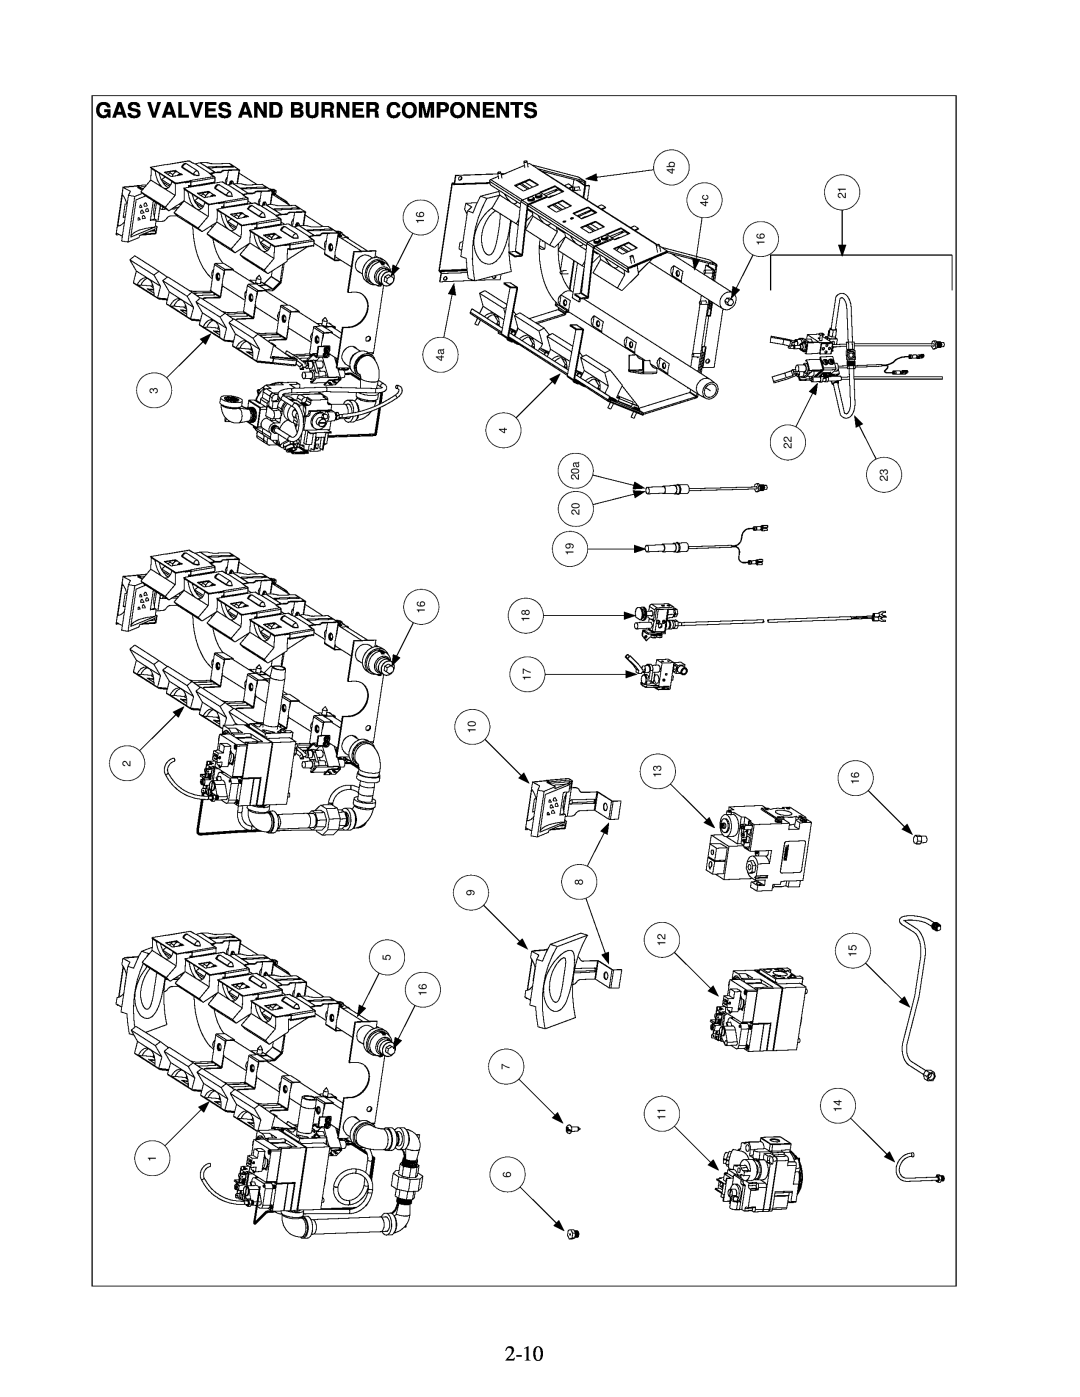 Frymaster 35 Series manual Components, Valves And Burner 